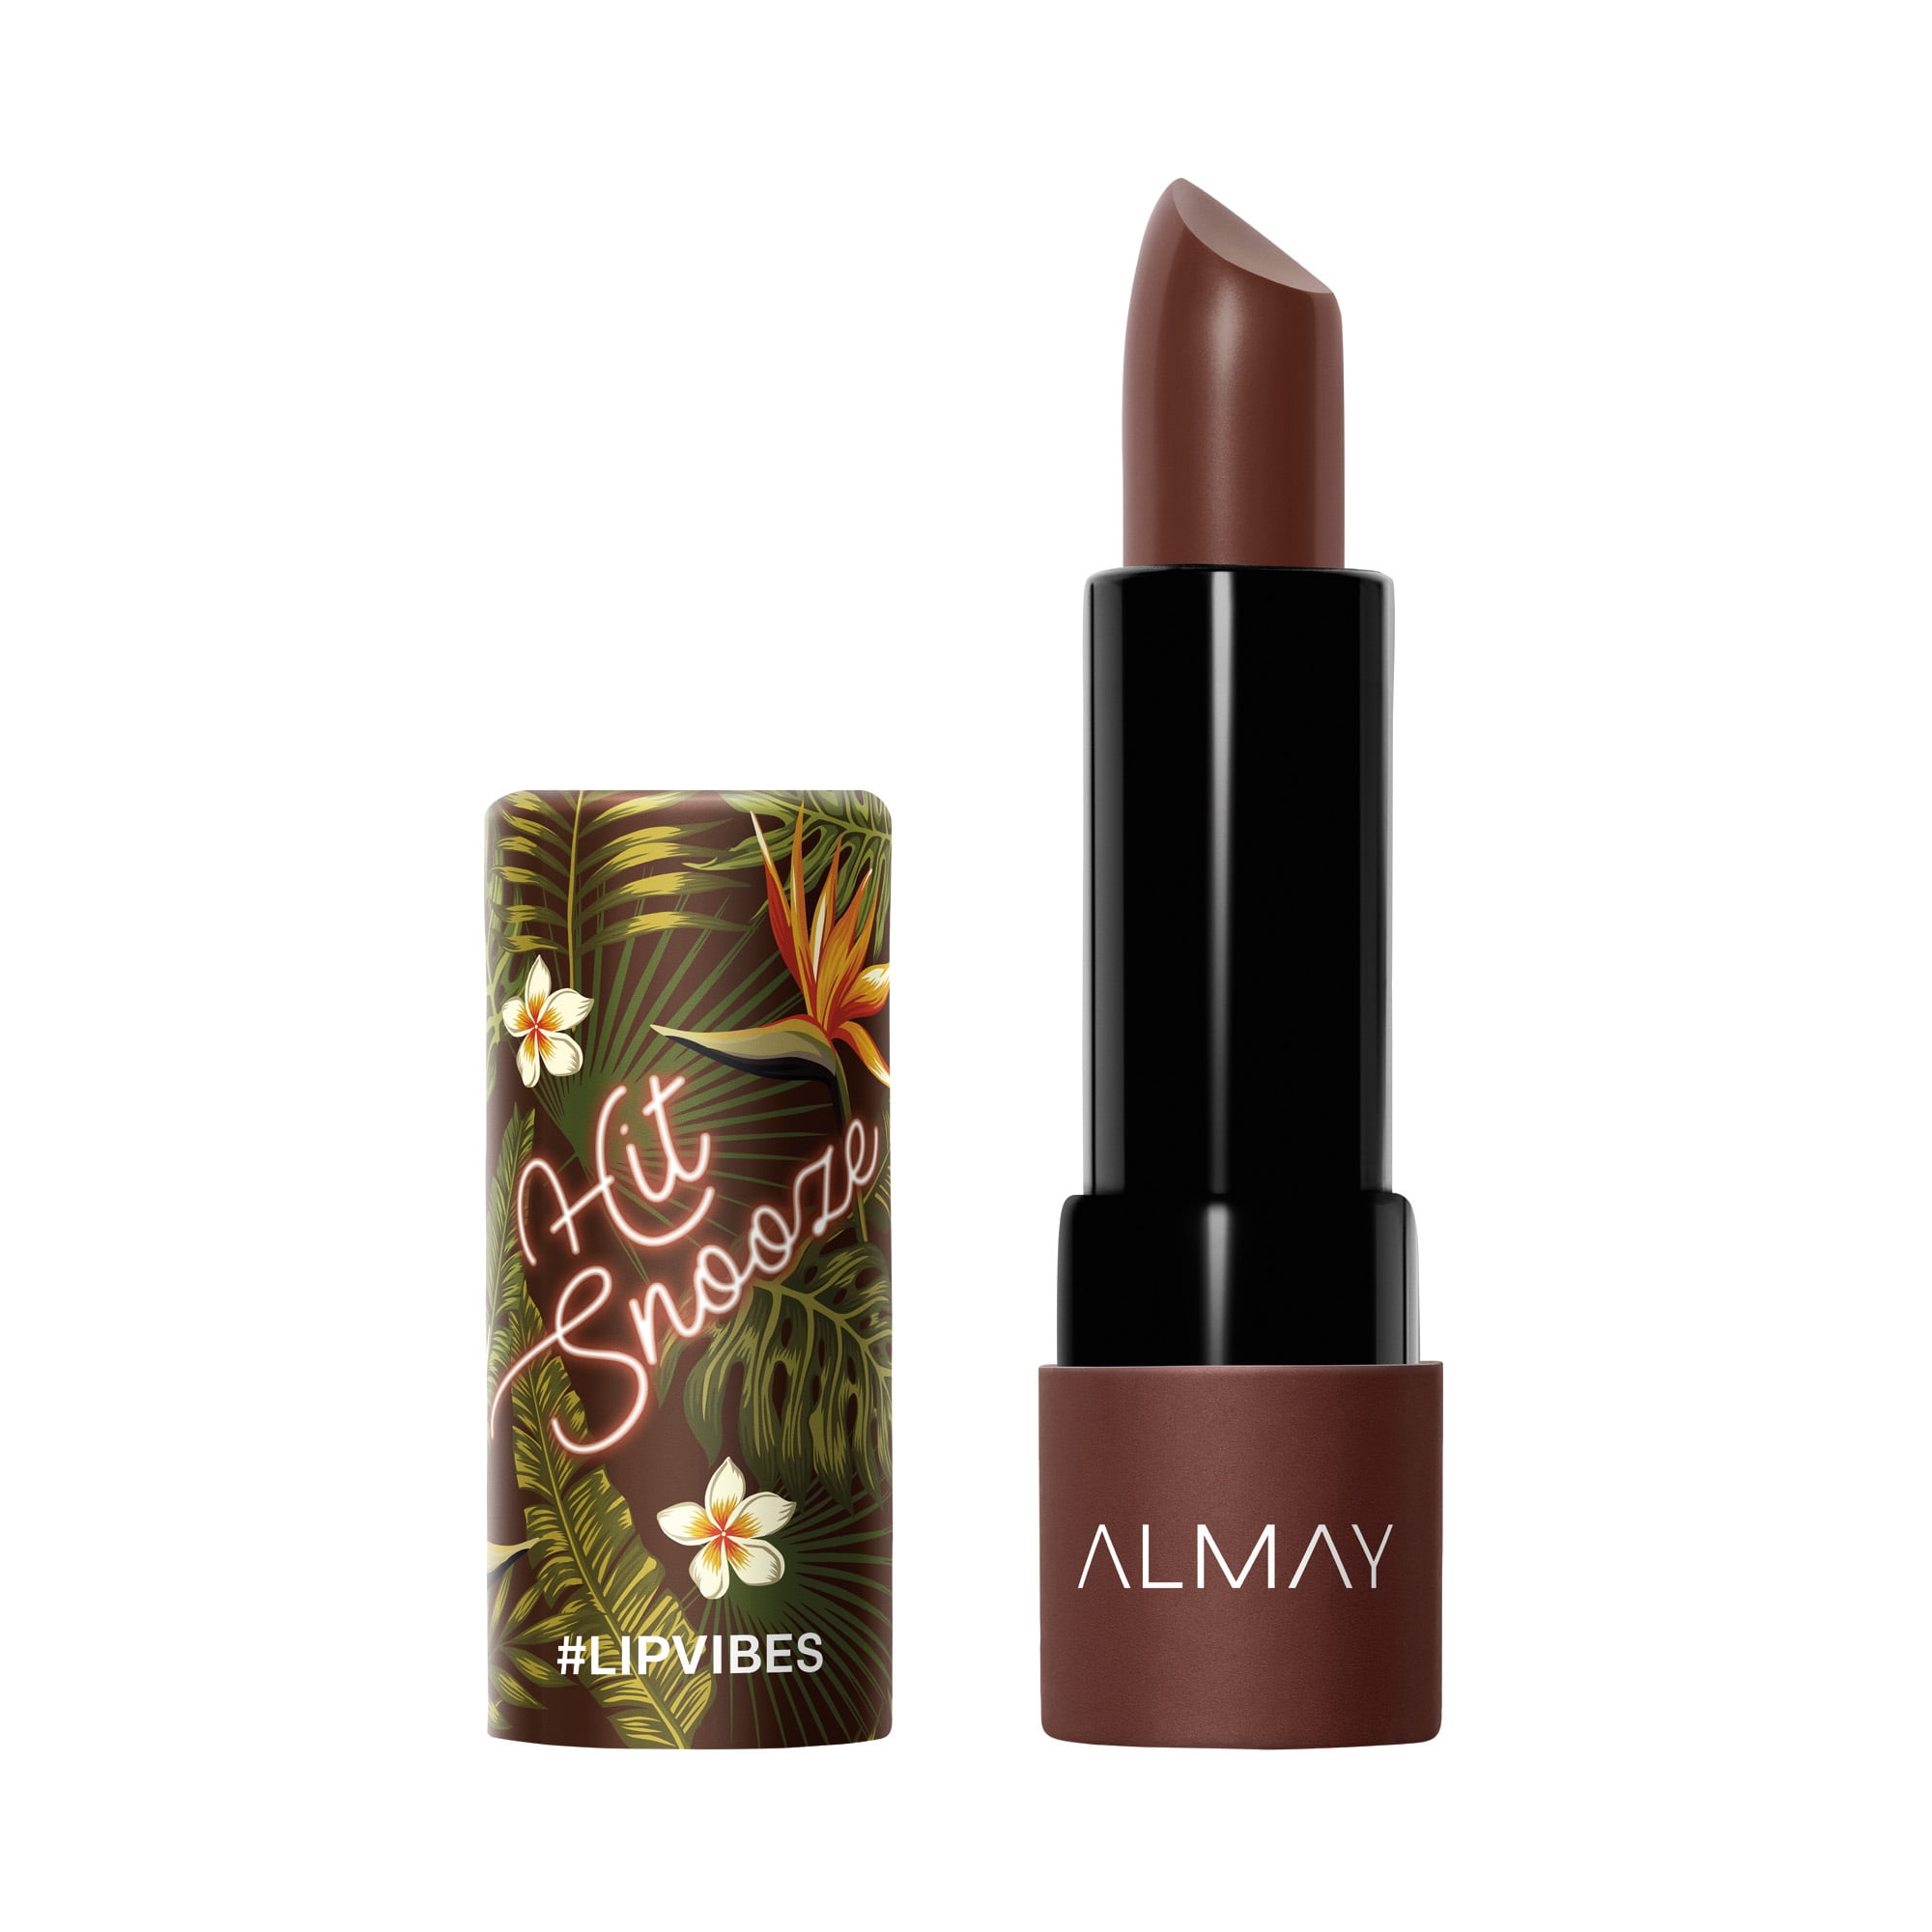 Almay new lipstick